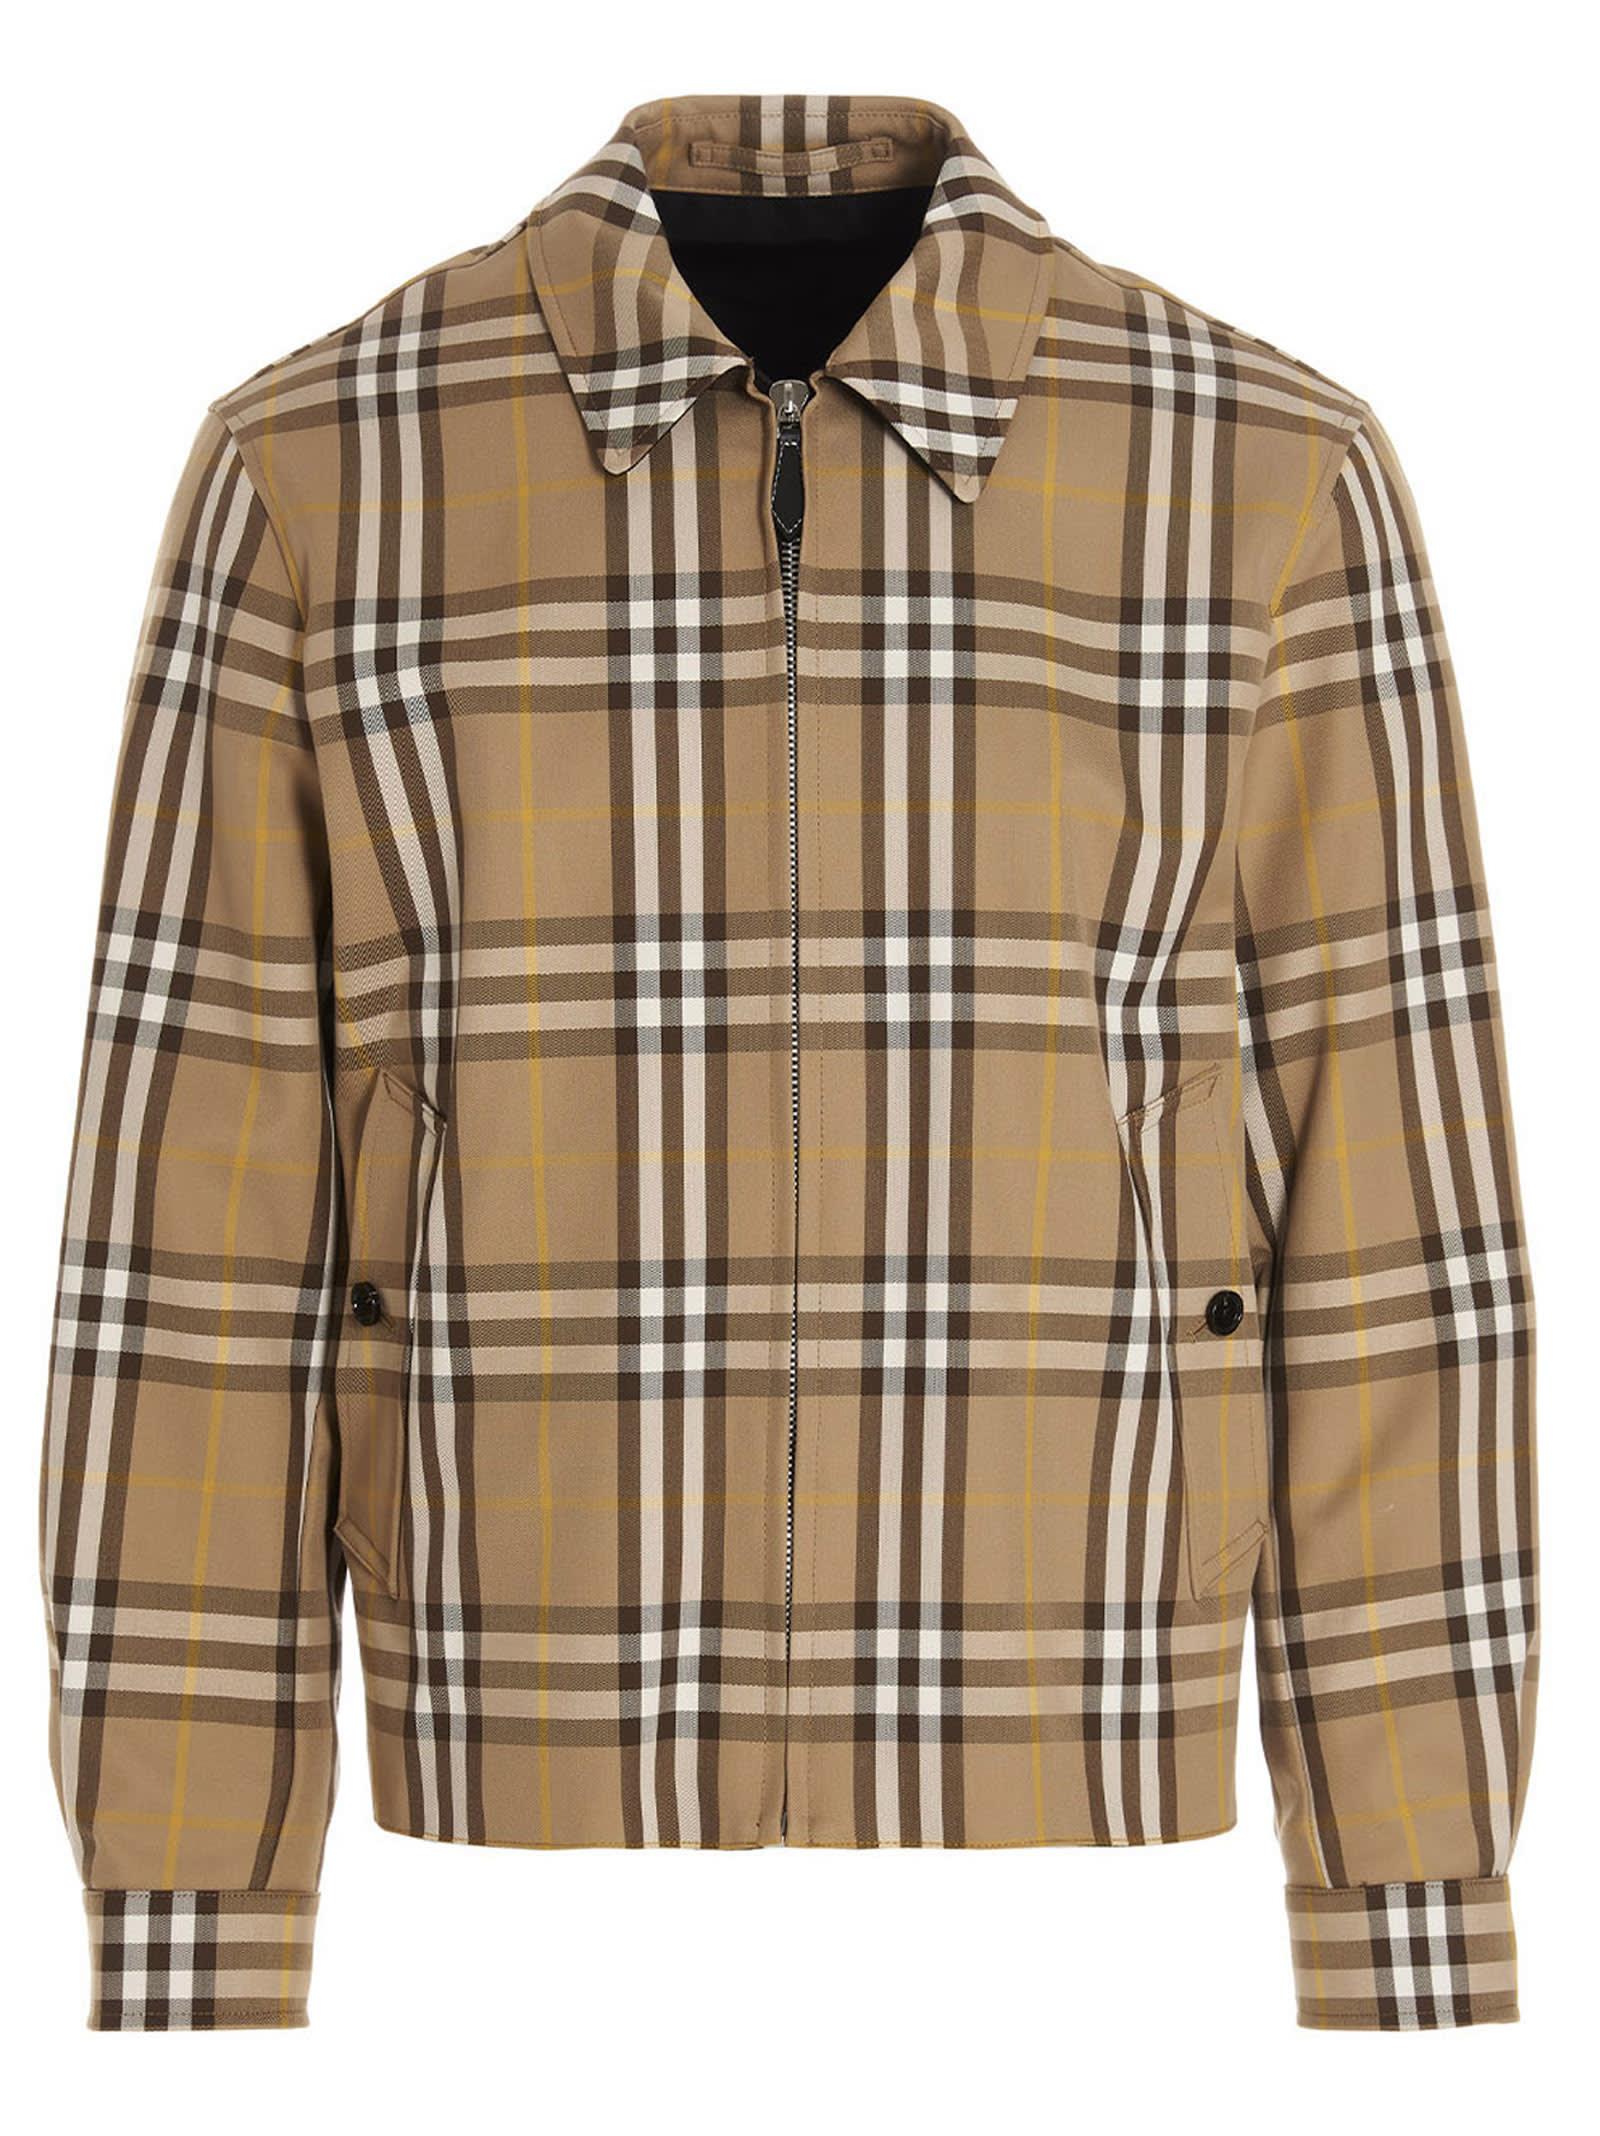 Burberry Cotton Harrington Jacket in Beige (Brown) for Men - Save 49% | Lyst